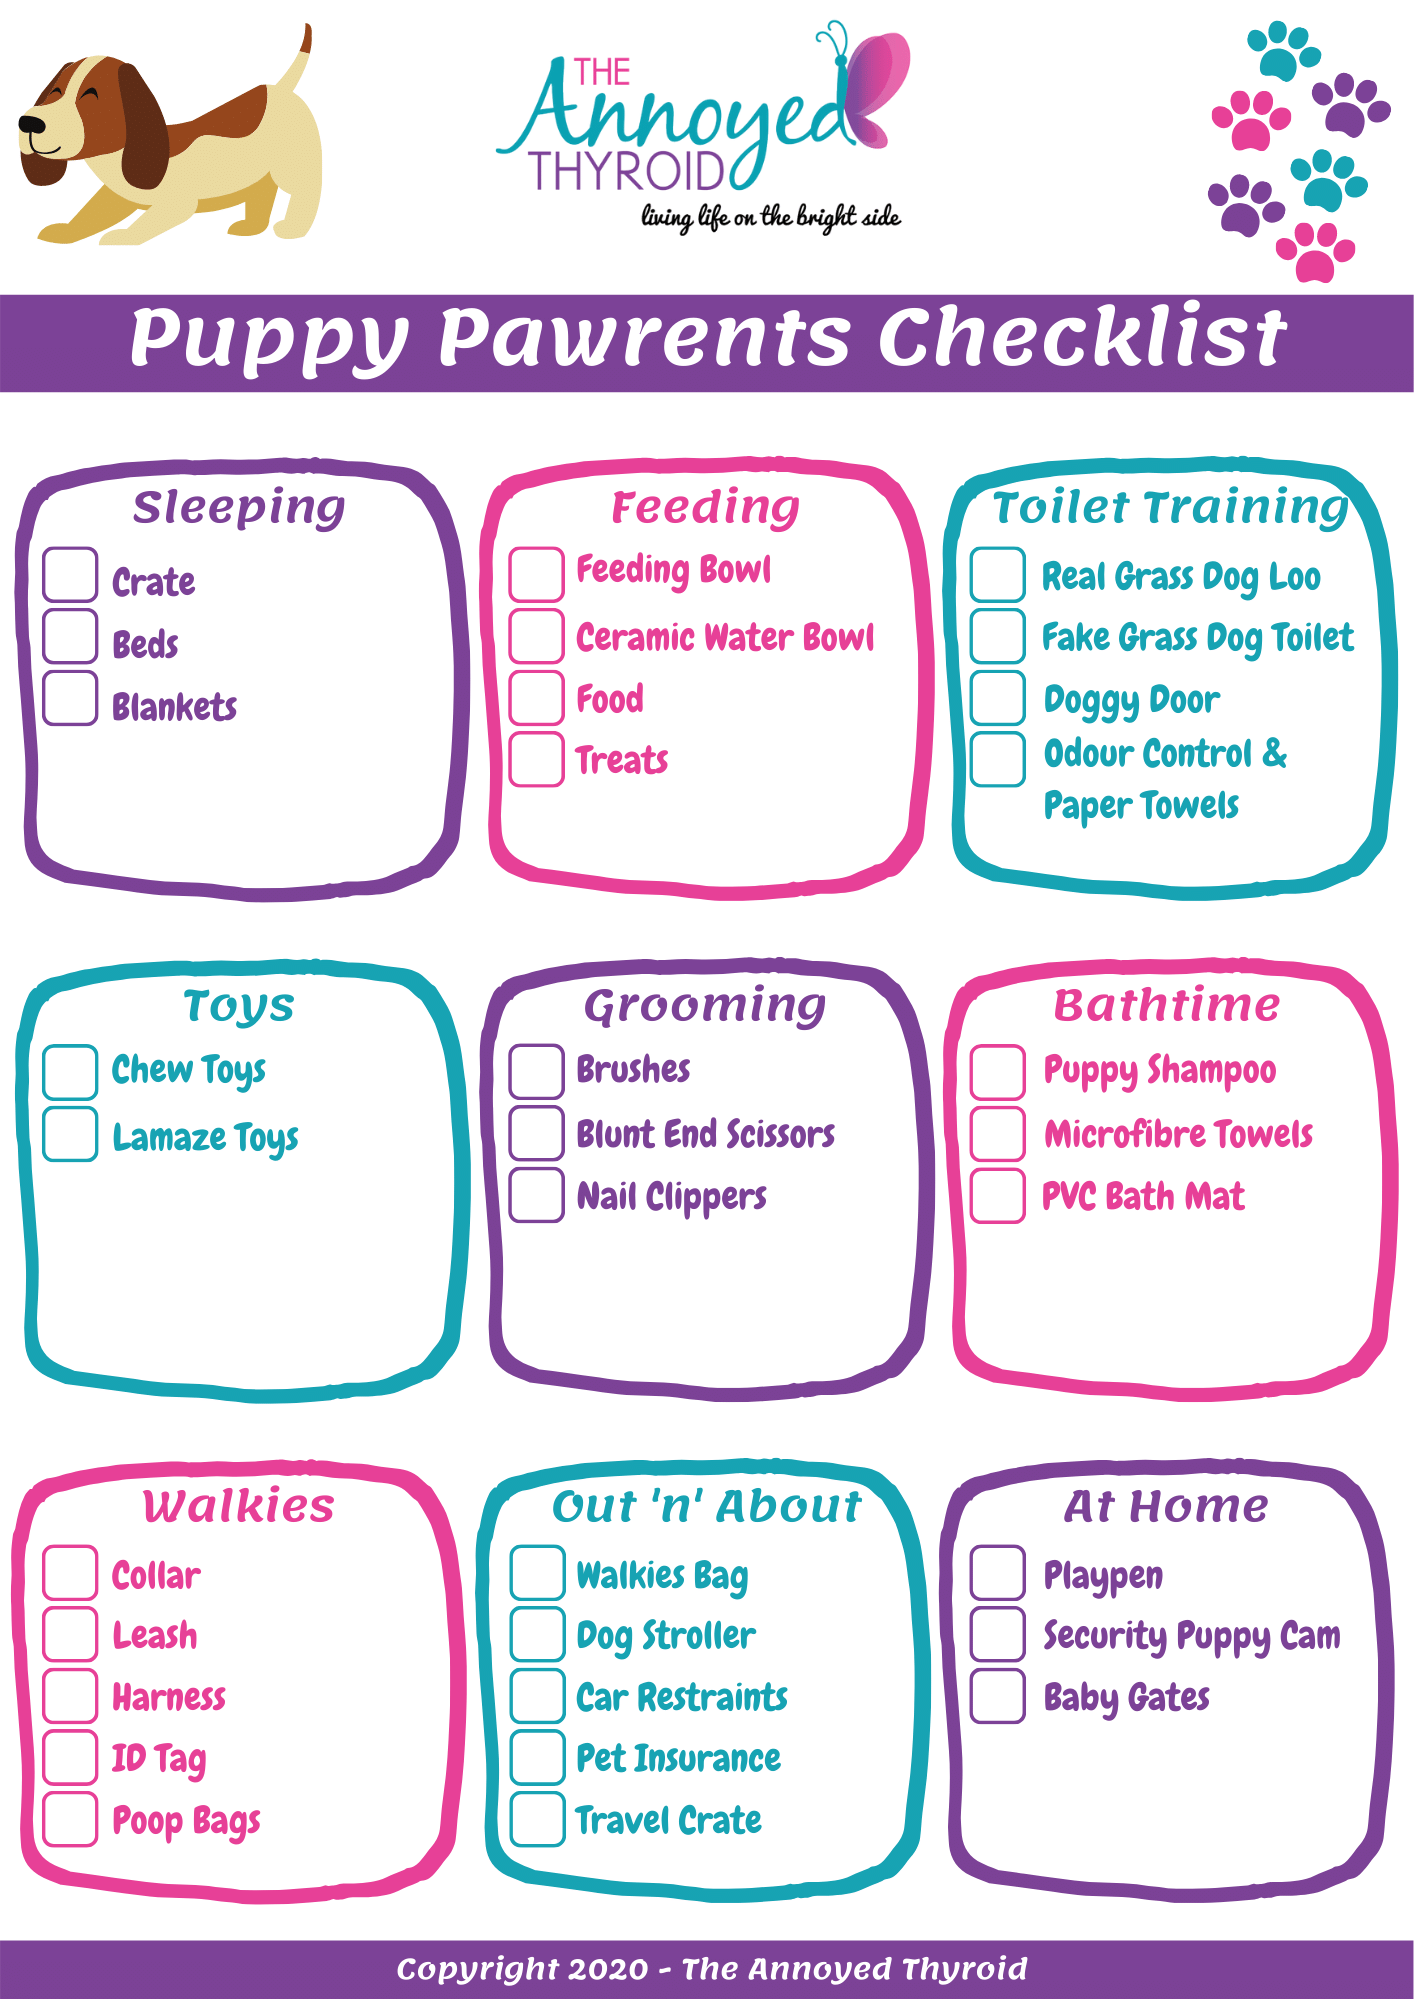 Puppy Basics The Checklist LaptrinhX / News